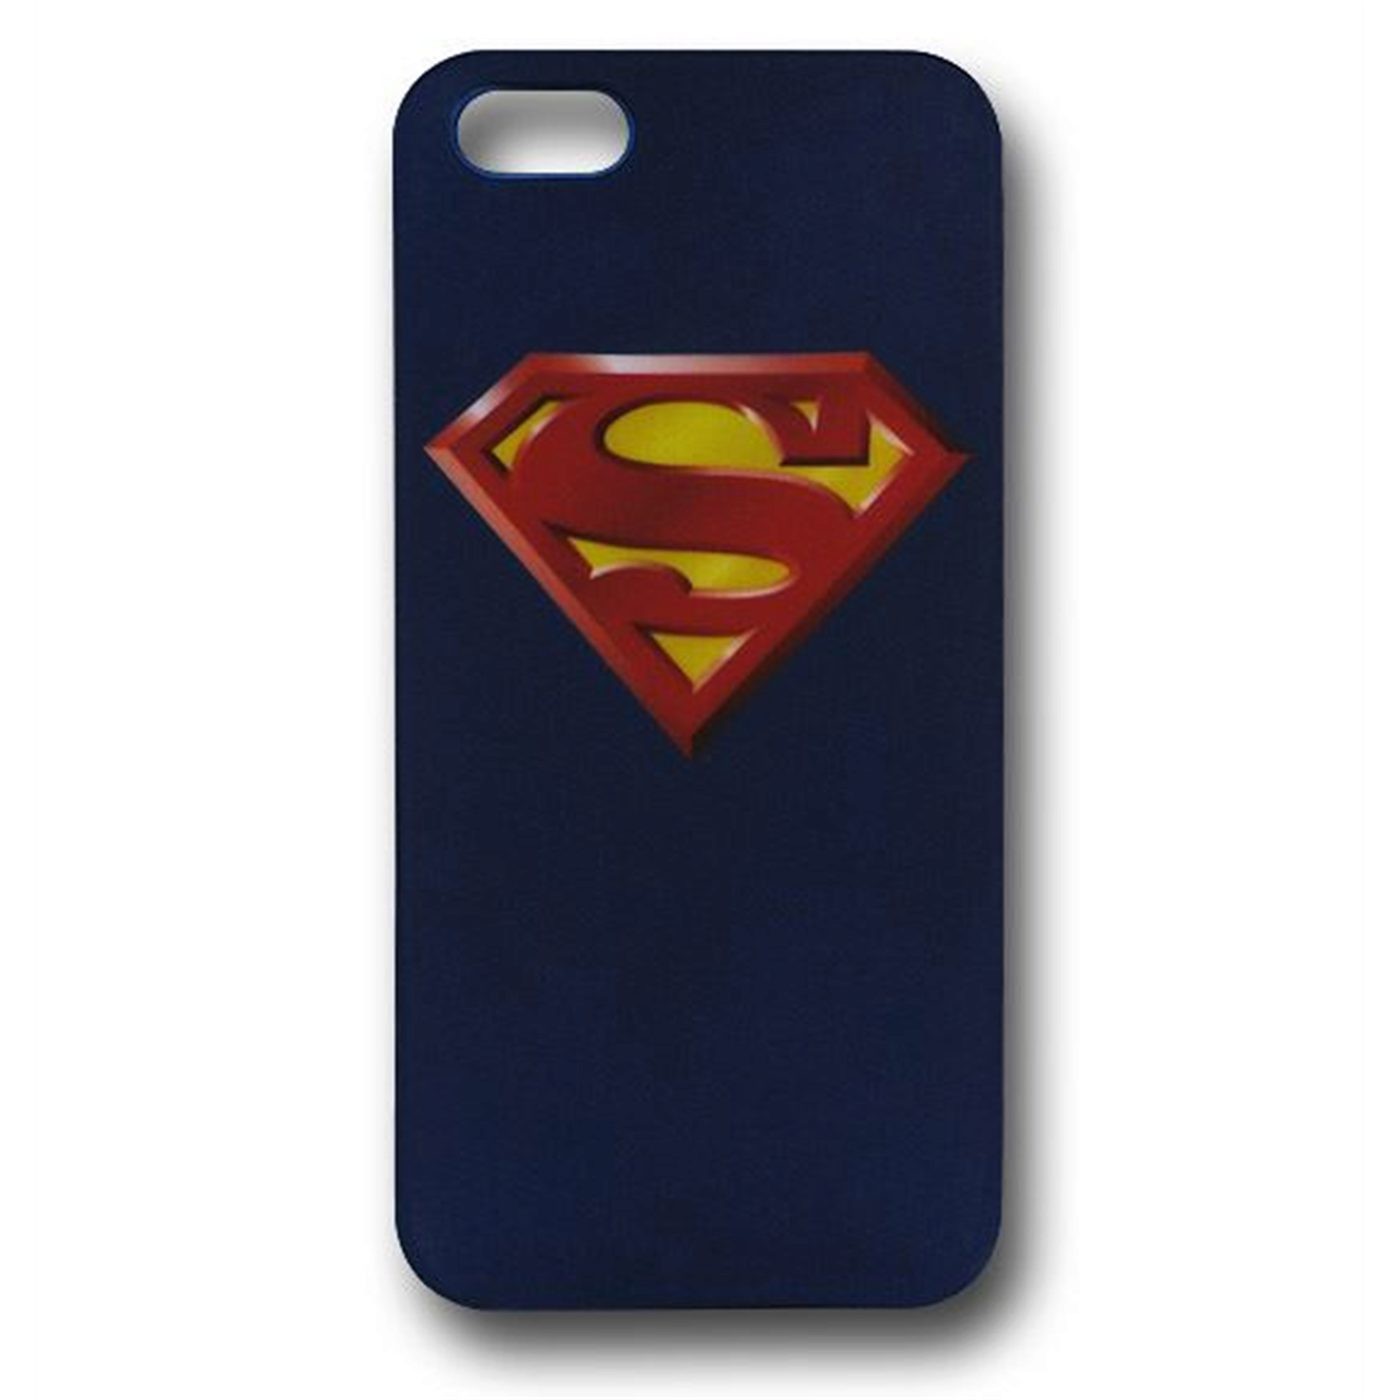 Superman Symbol iPhone 5 Hard Case